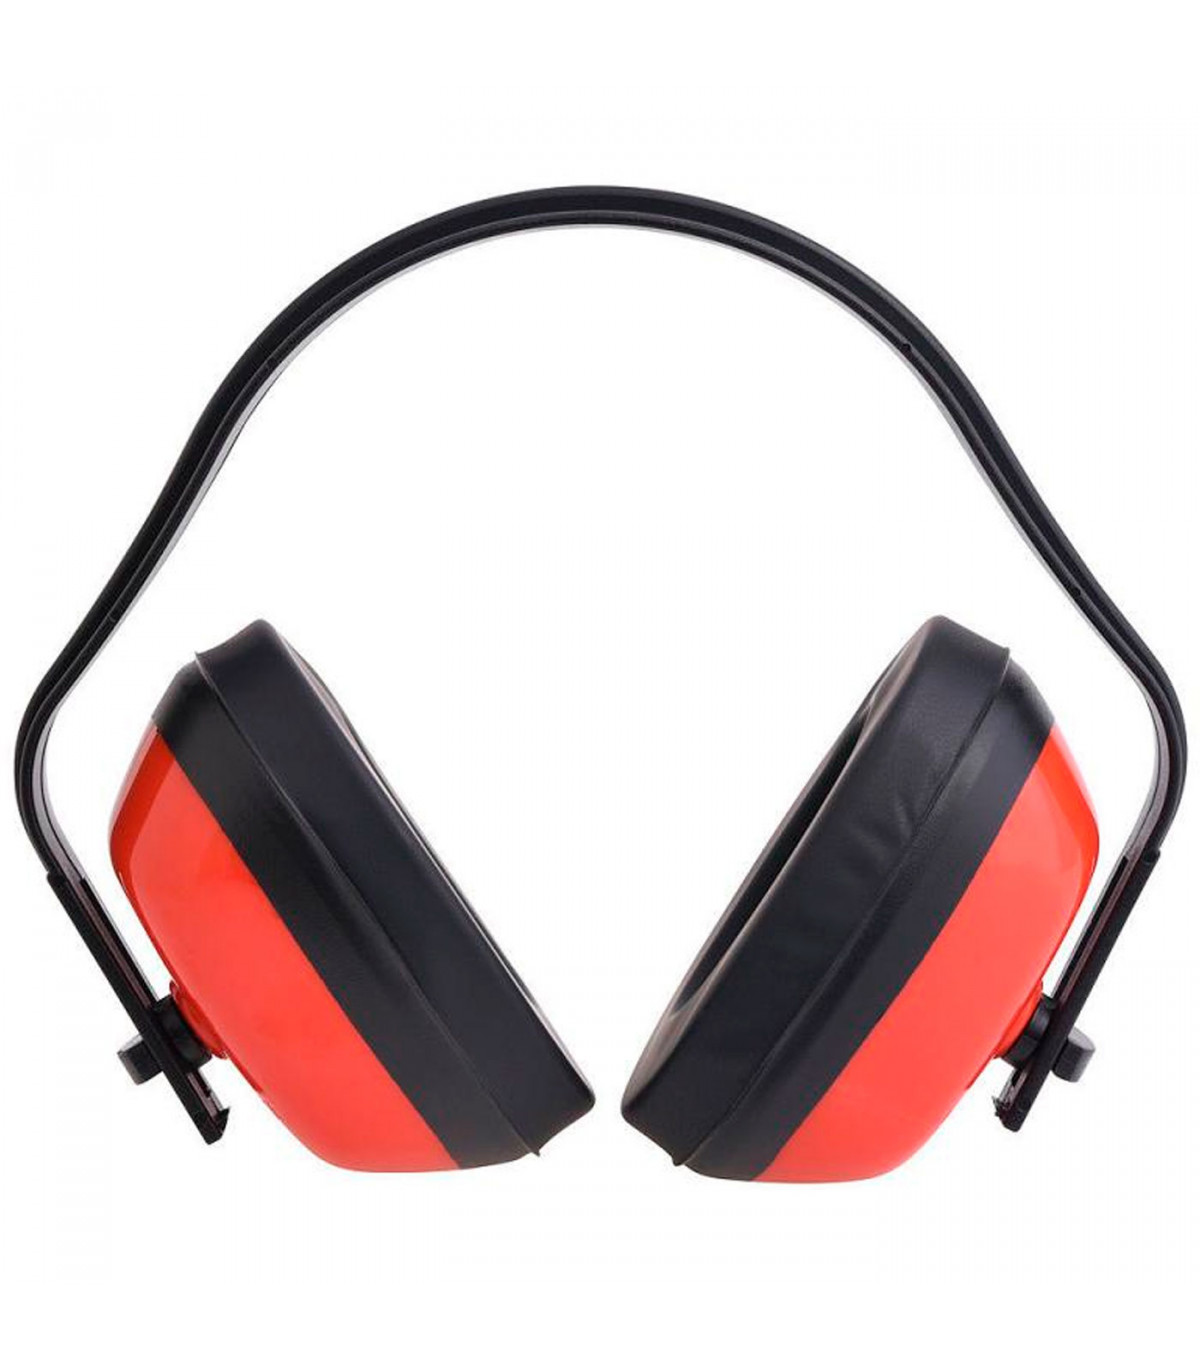 Importancia de usar protectores auditivos - Igardi